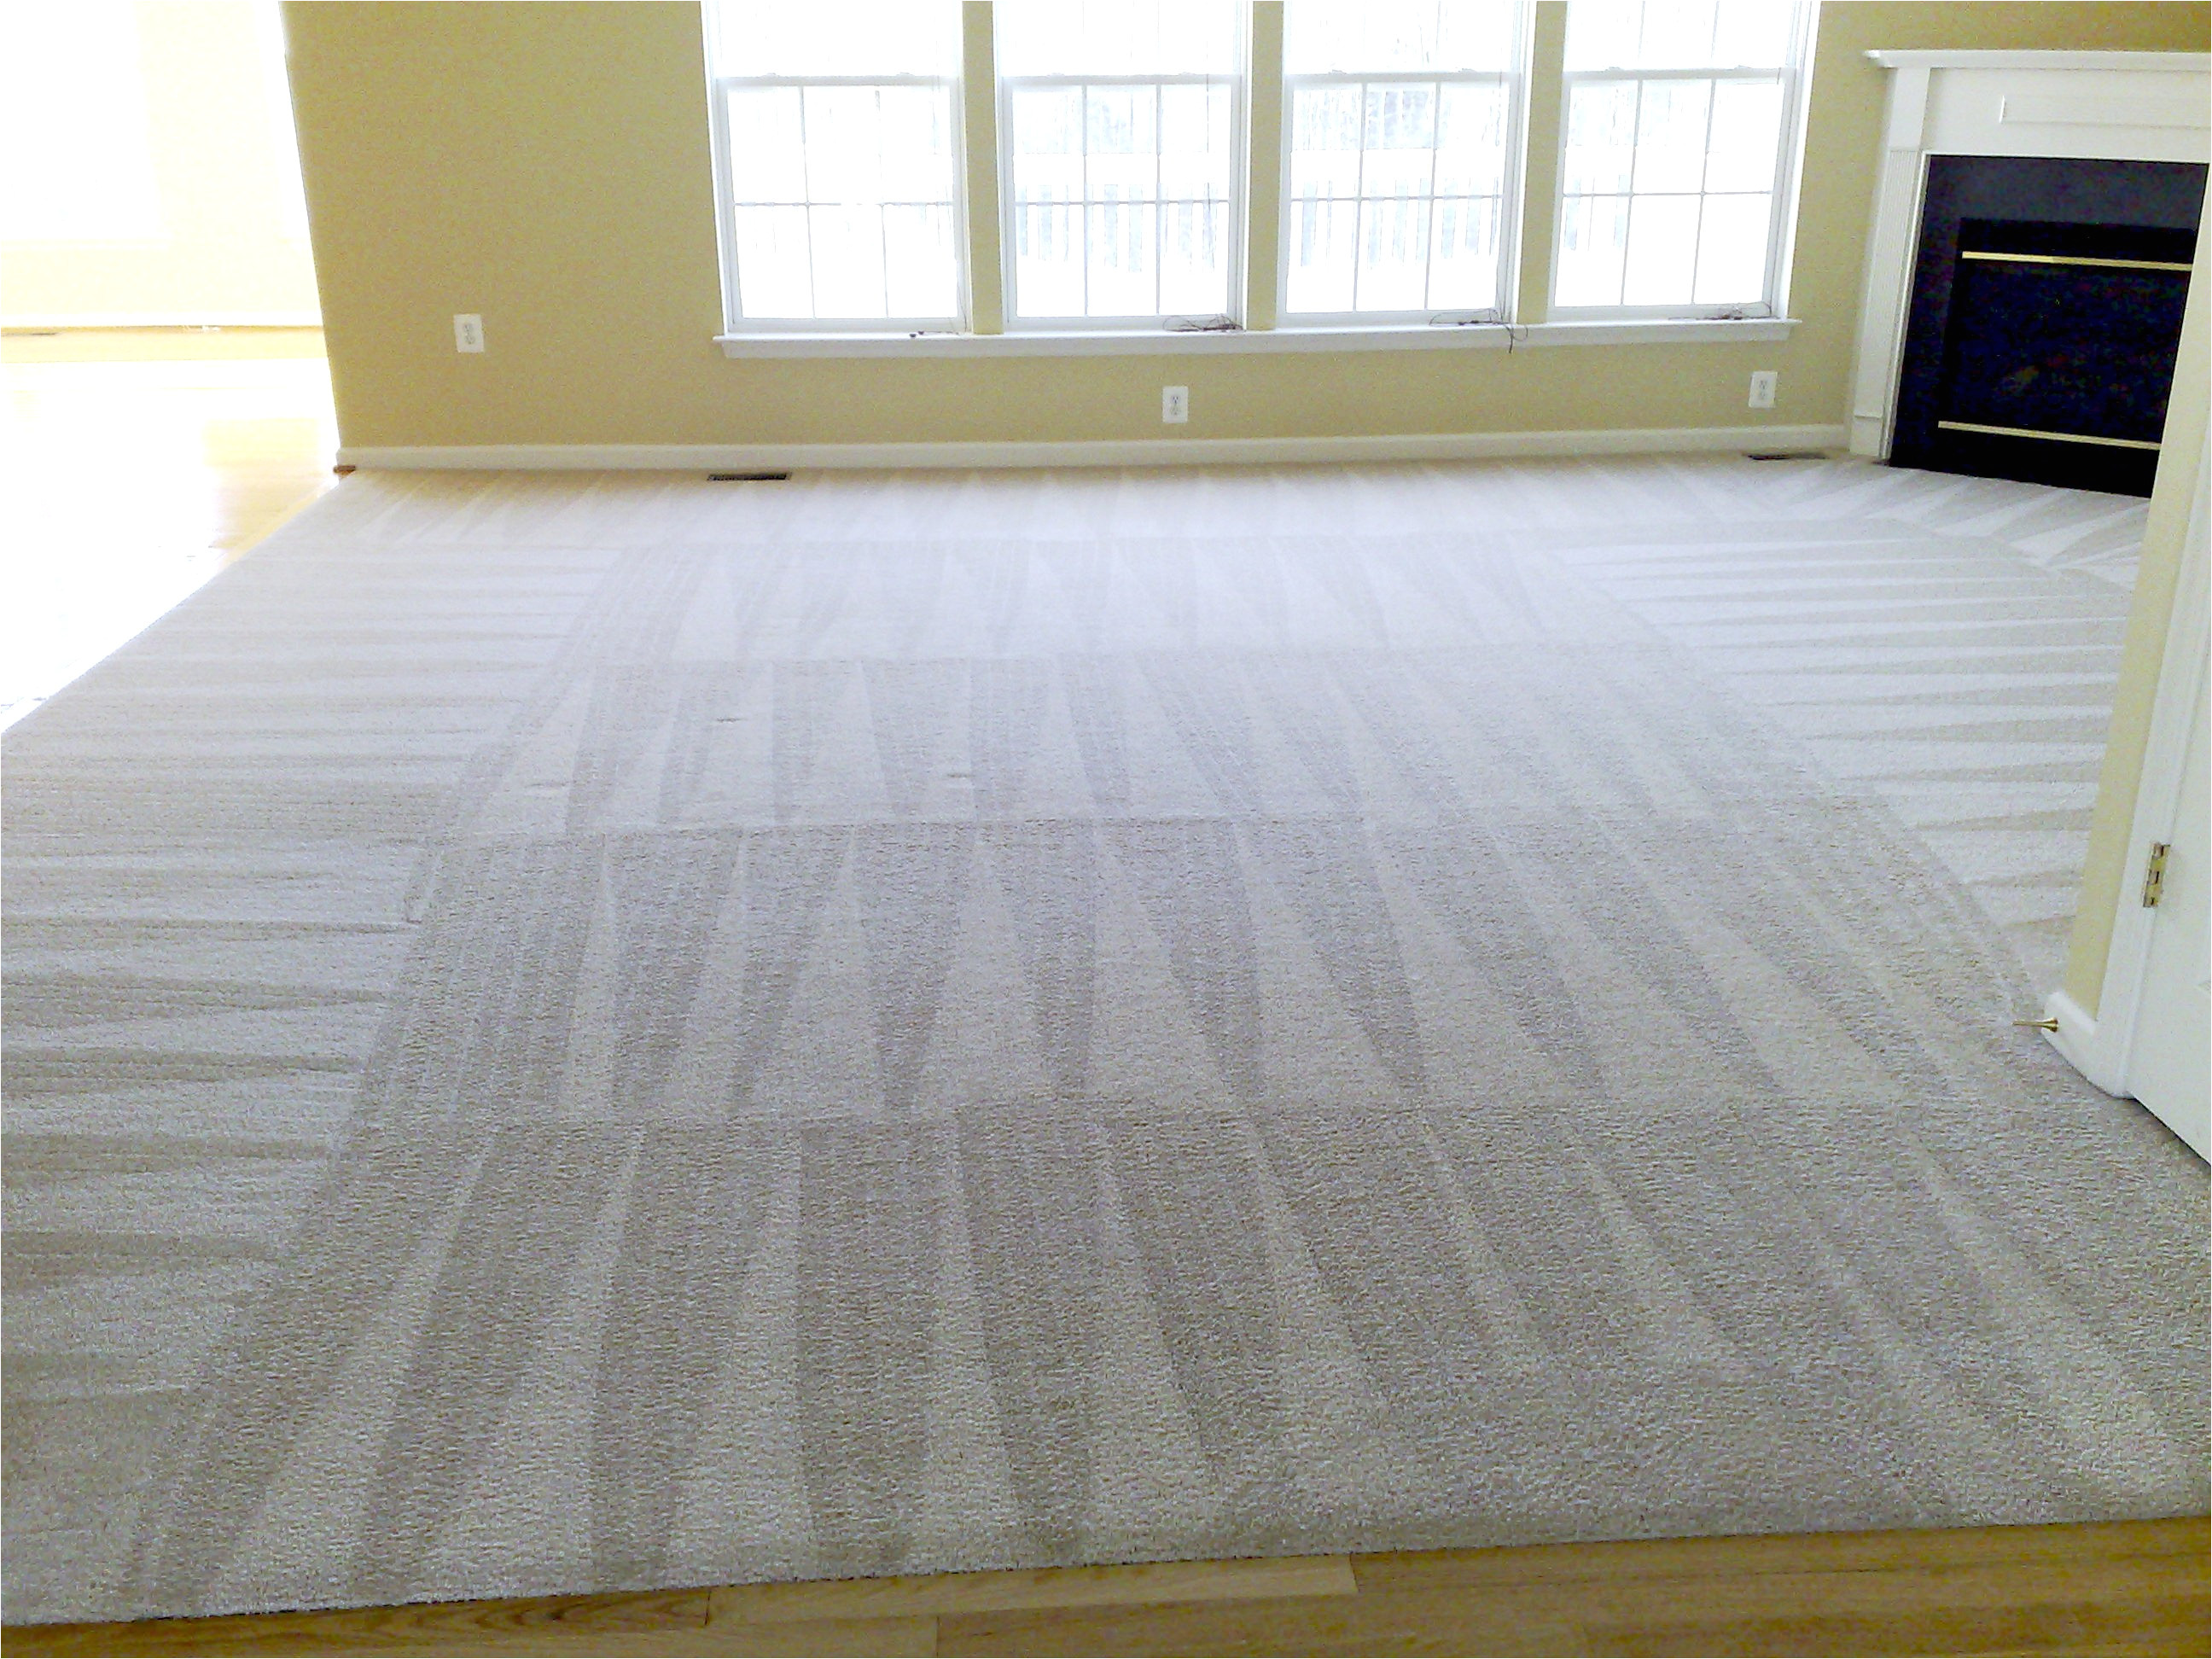 carpet cleaners stafford va fresh superior fabric cleaners fredericksburg carpet cleaners of carpet cleaners stafford va jpg